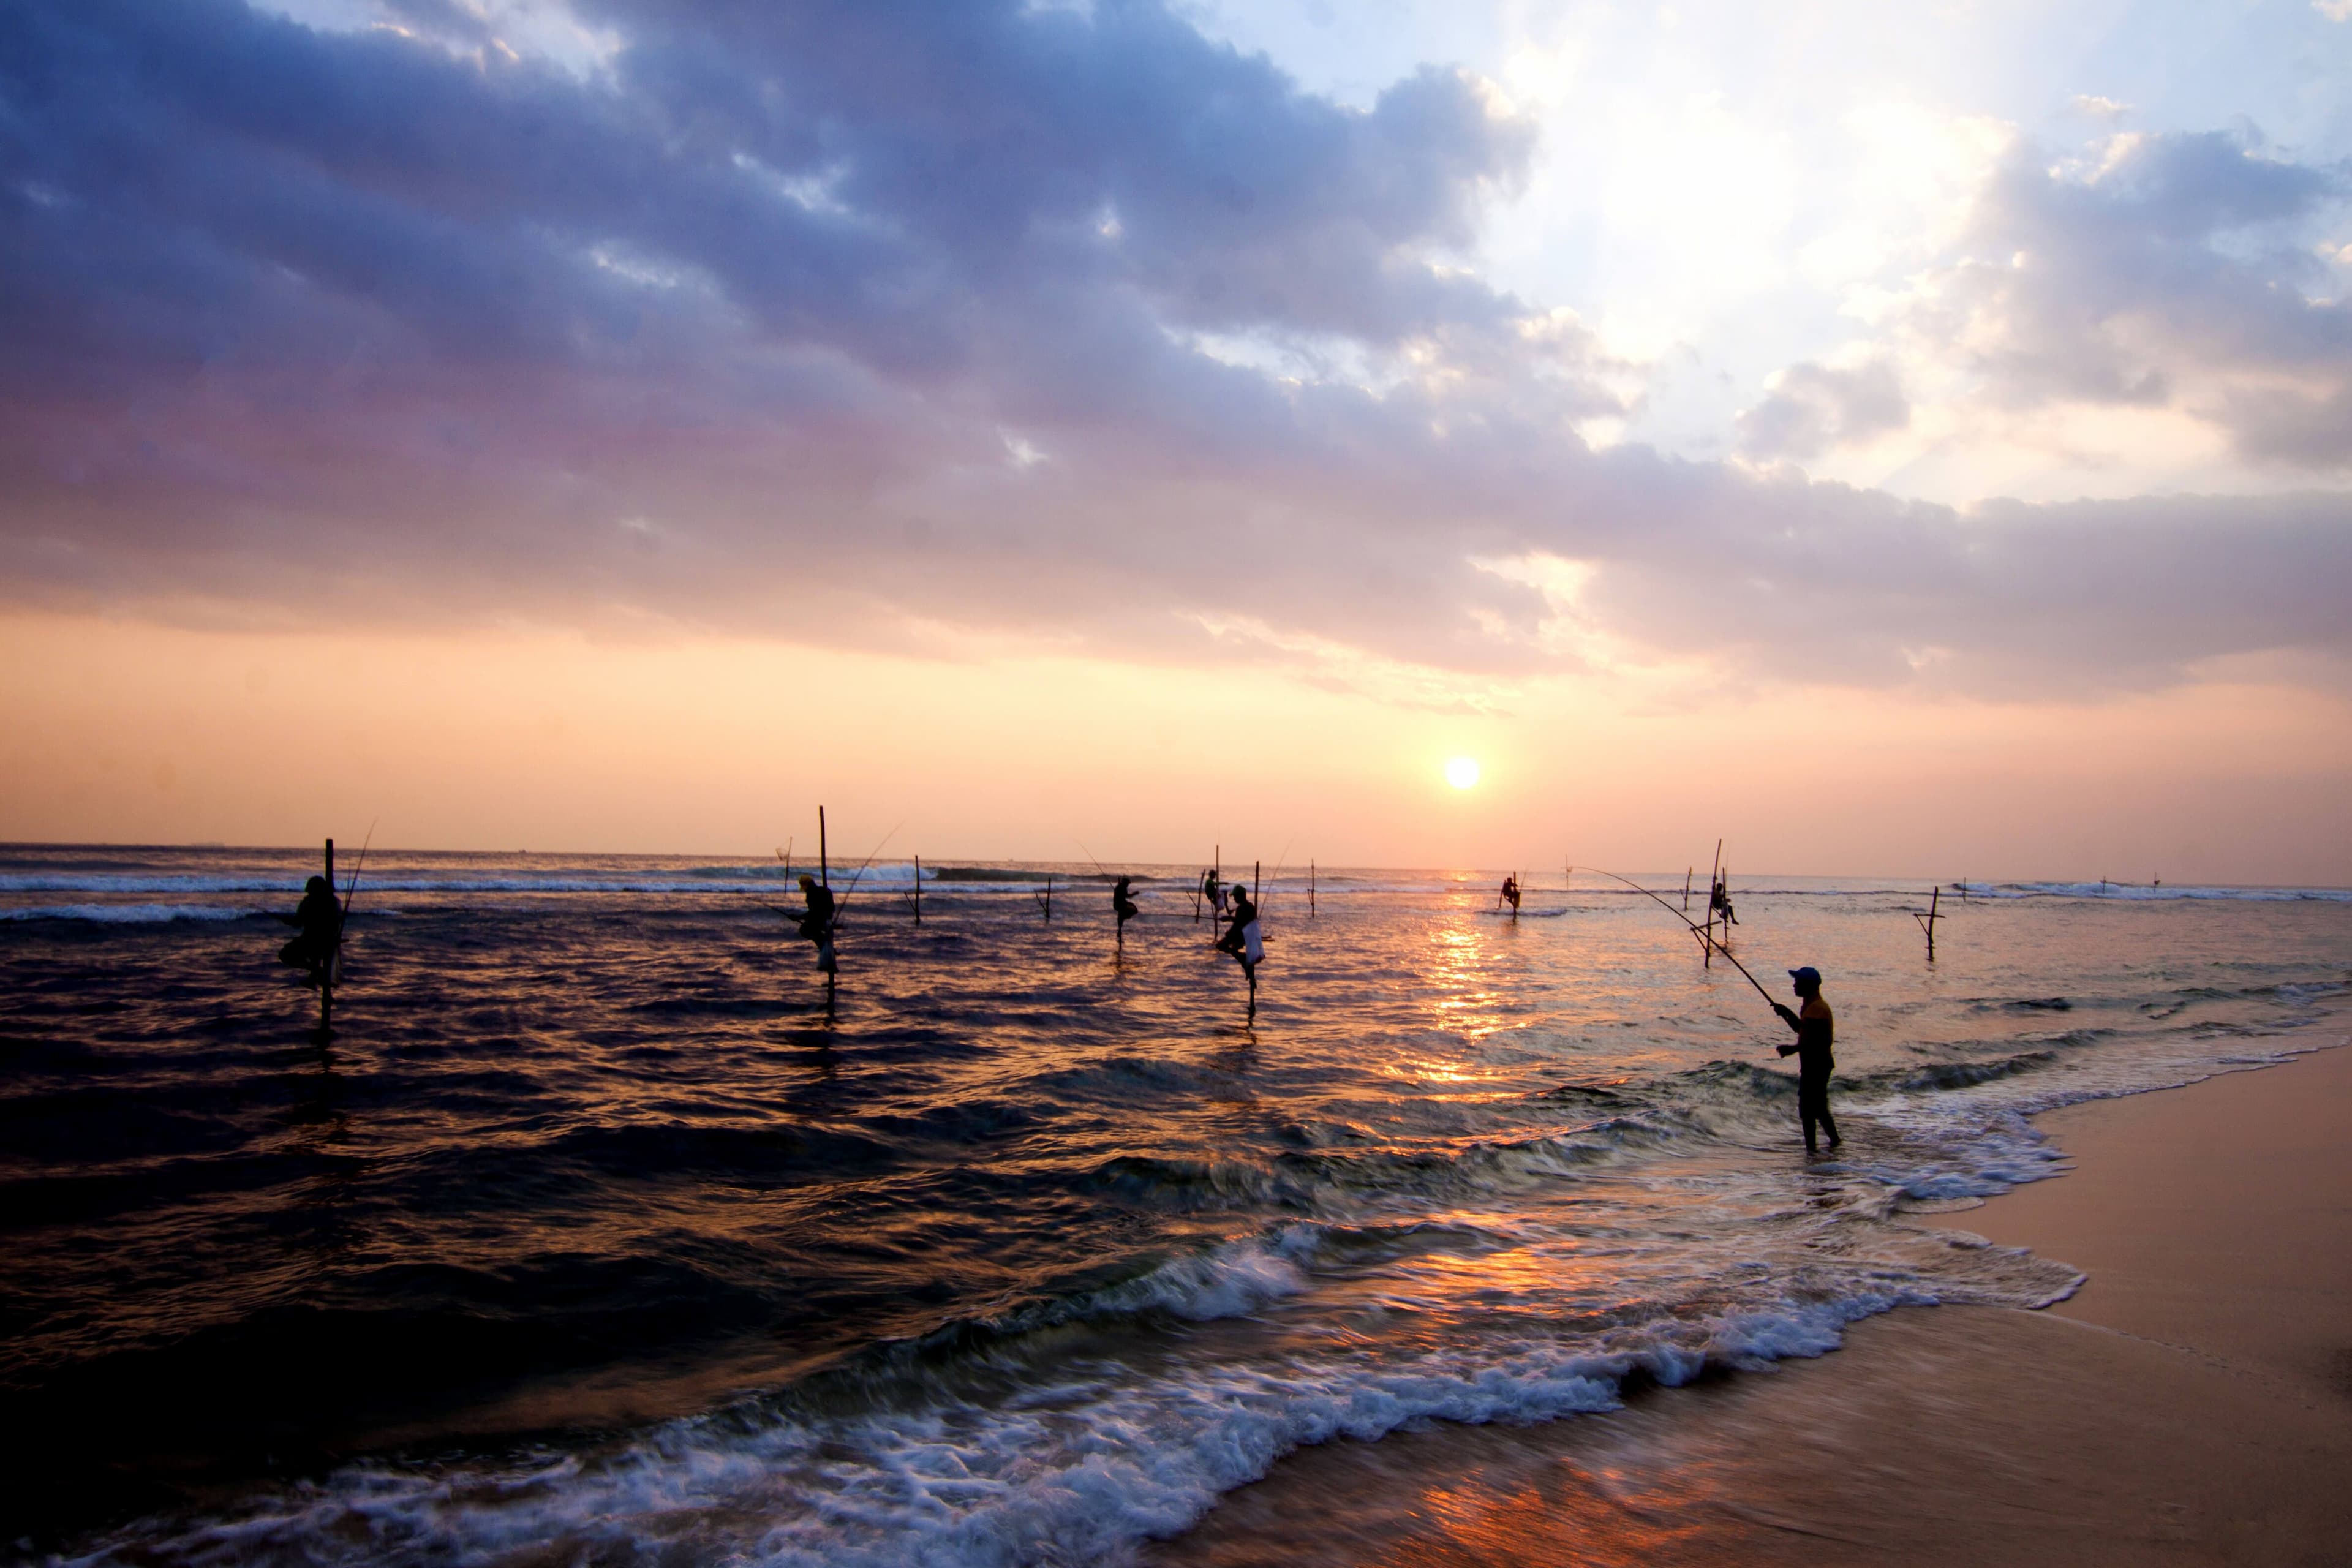 Silhouettes of the traditional stilt fishermen at the sunset near Galle, Sri Lanka.